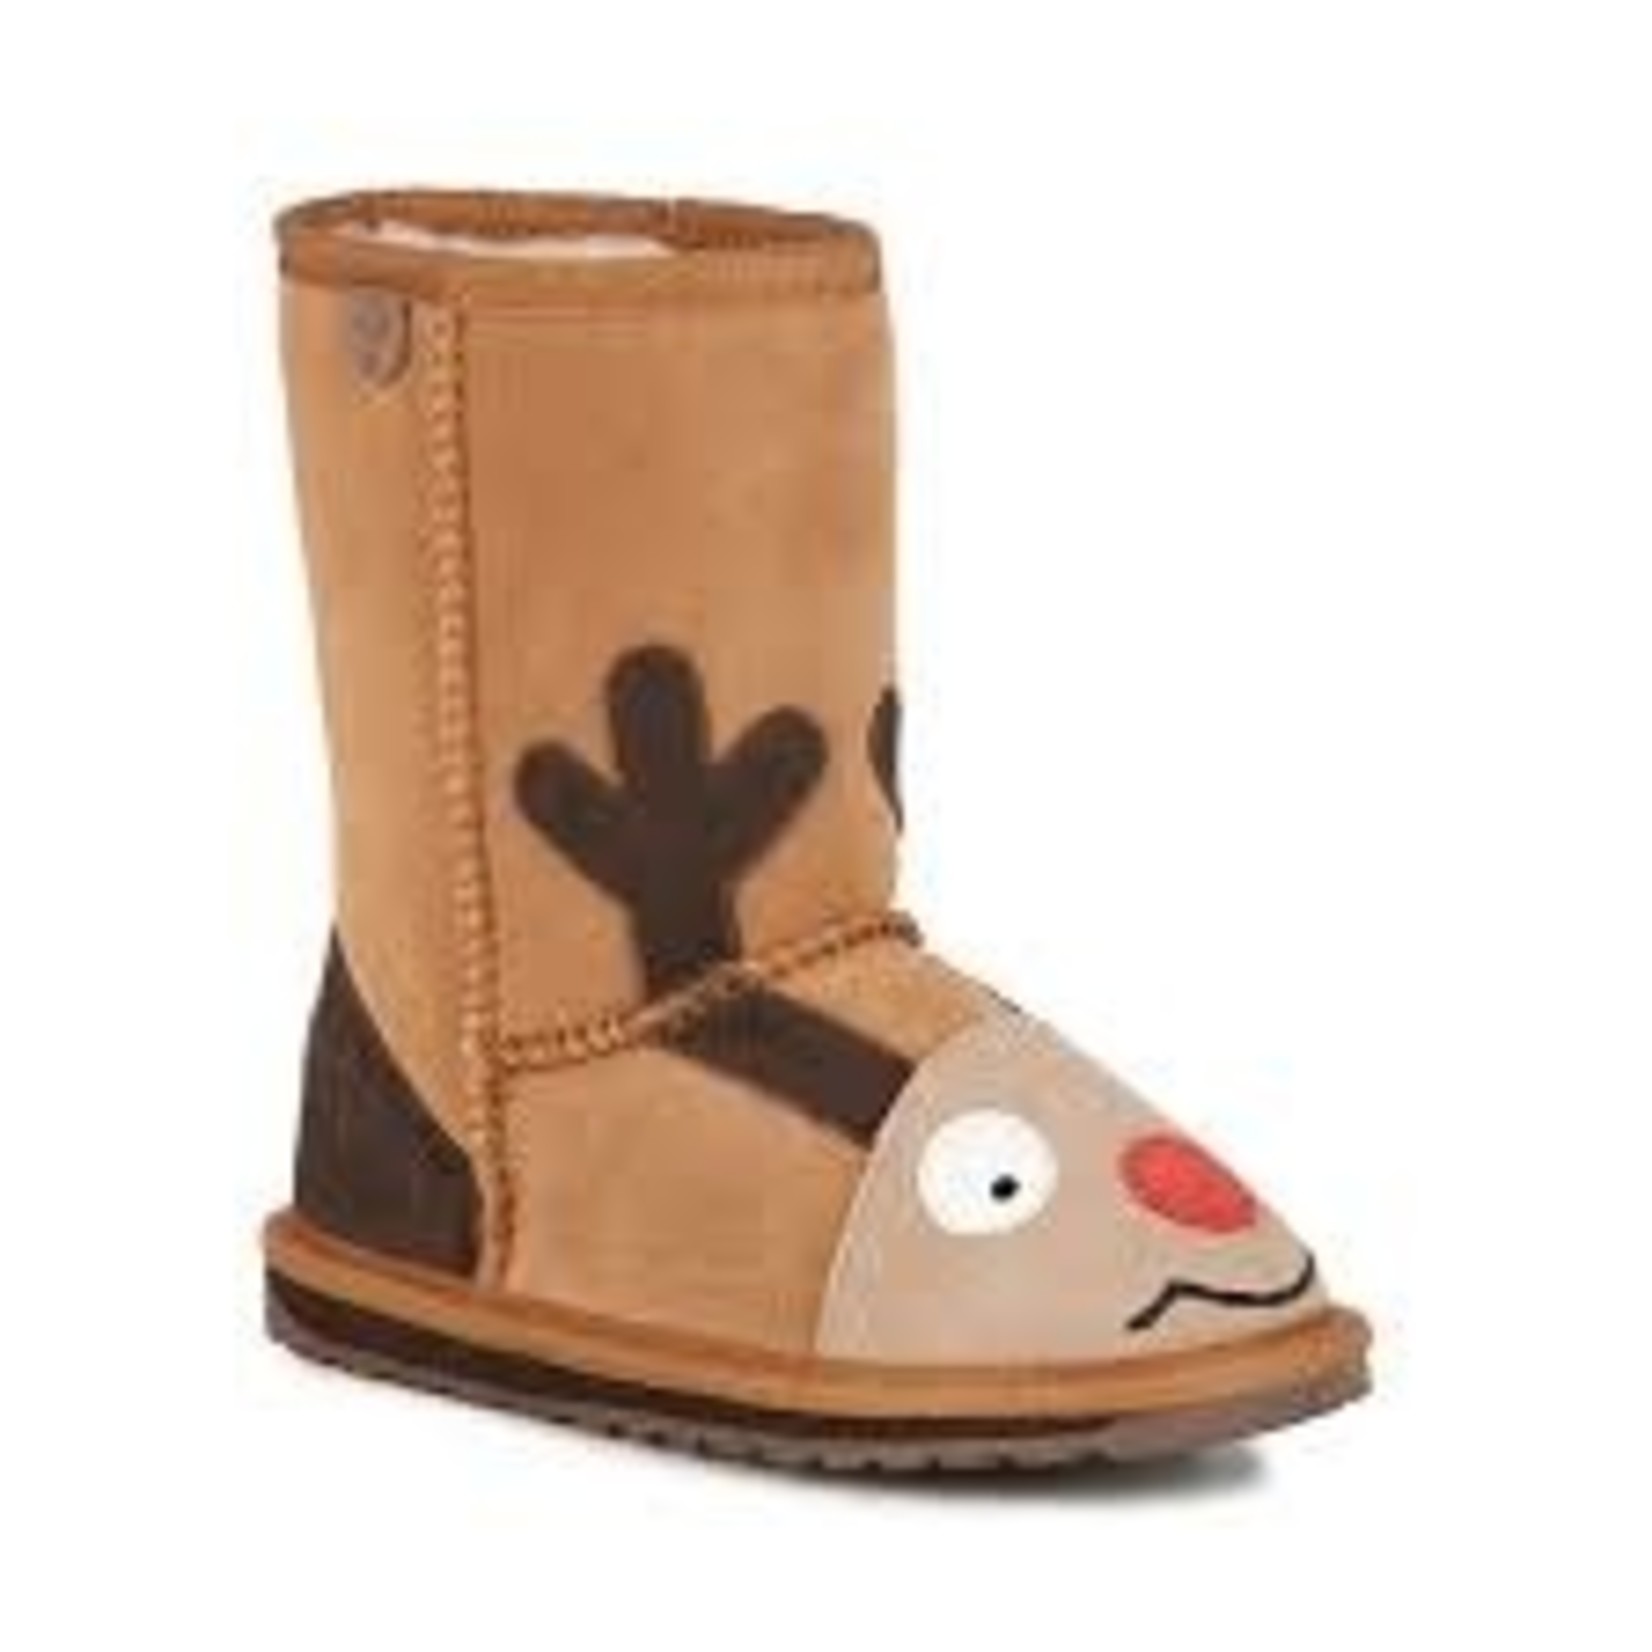 Emu EMU toddler boots